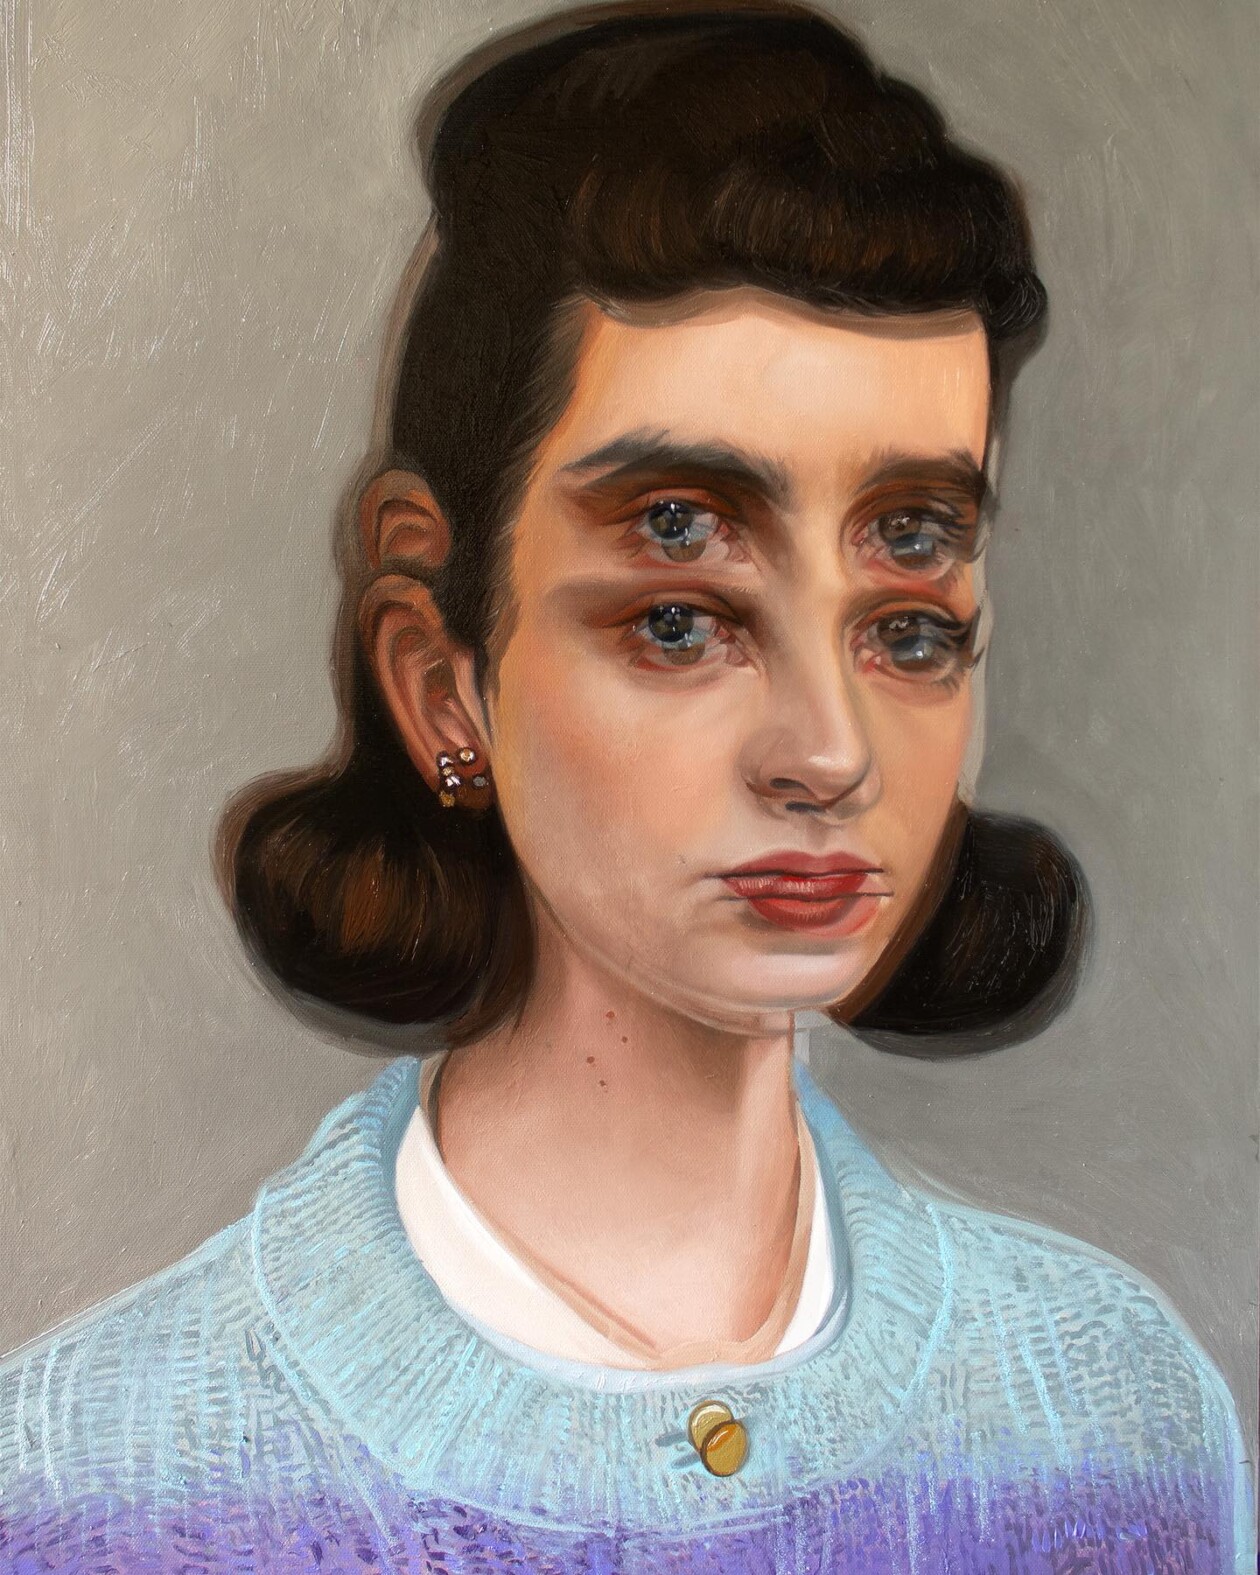 Alex Garant Overlaps Repeated Female Figures To Create Unique And Hypnotizing Portrait Paintings (6)